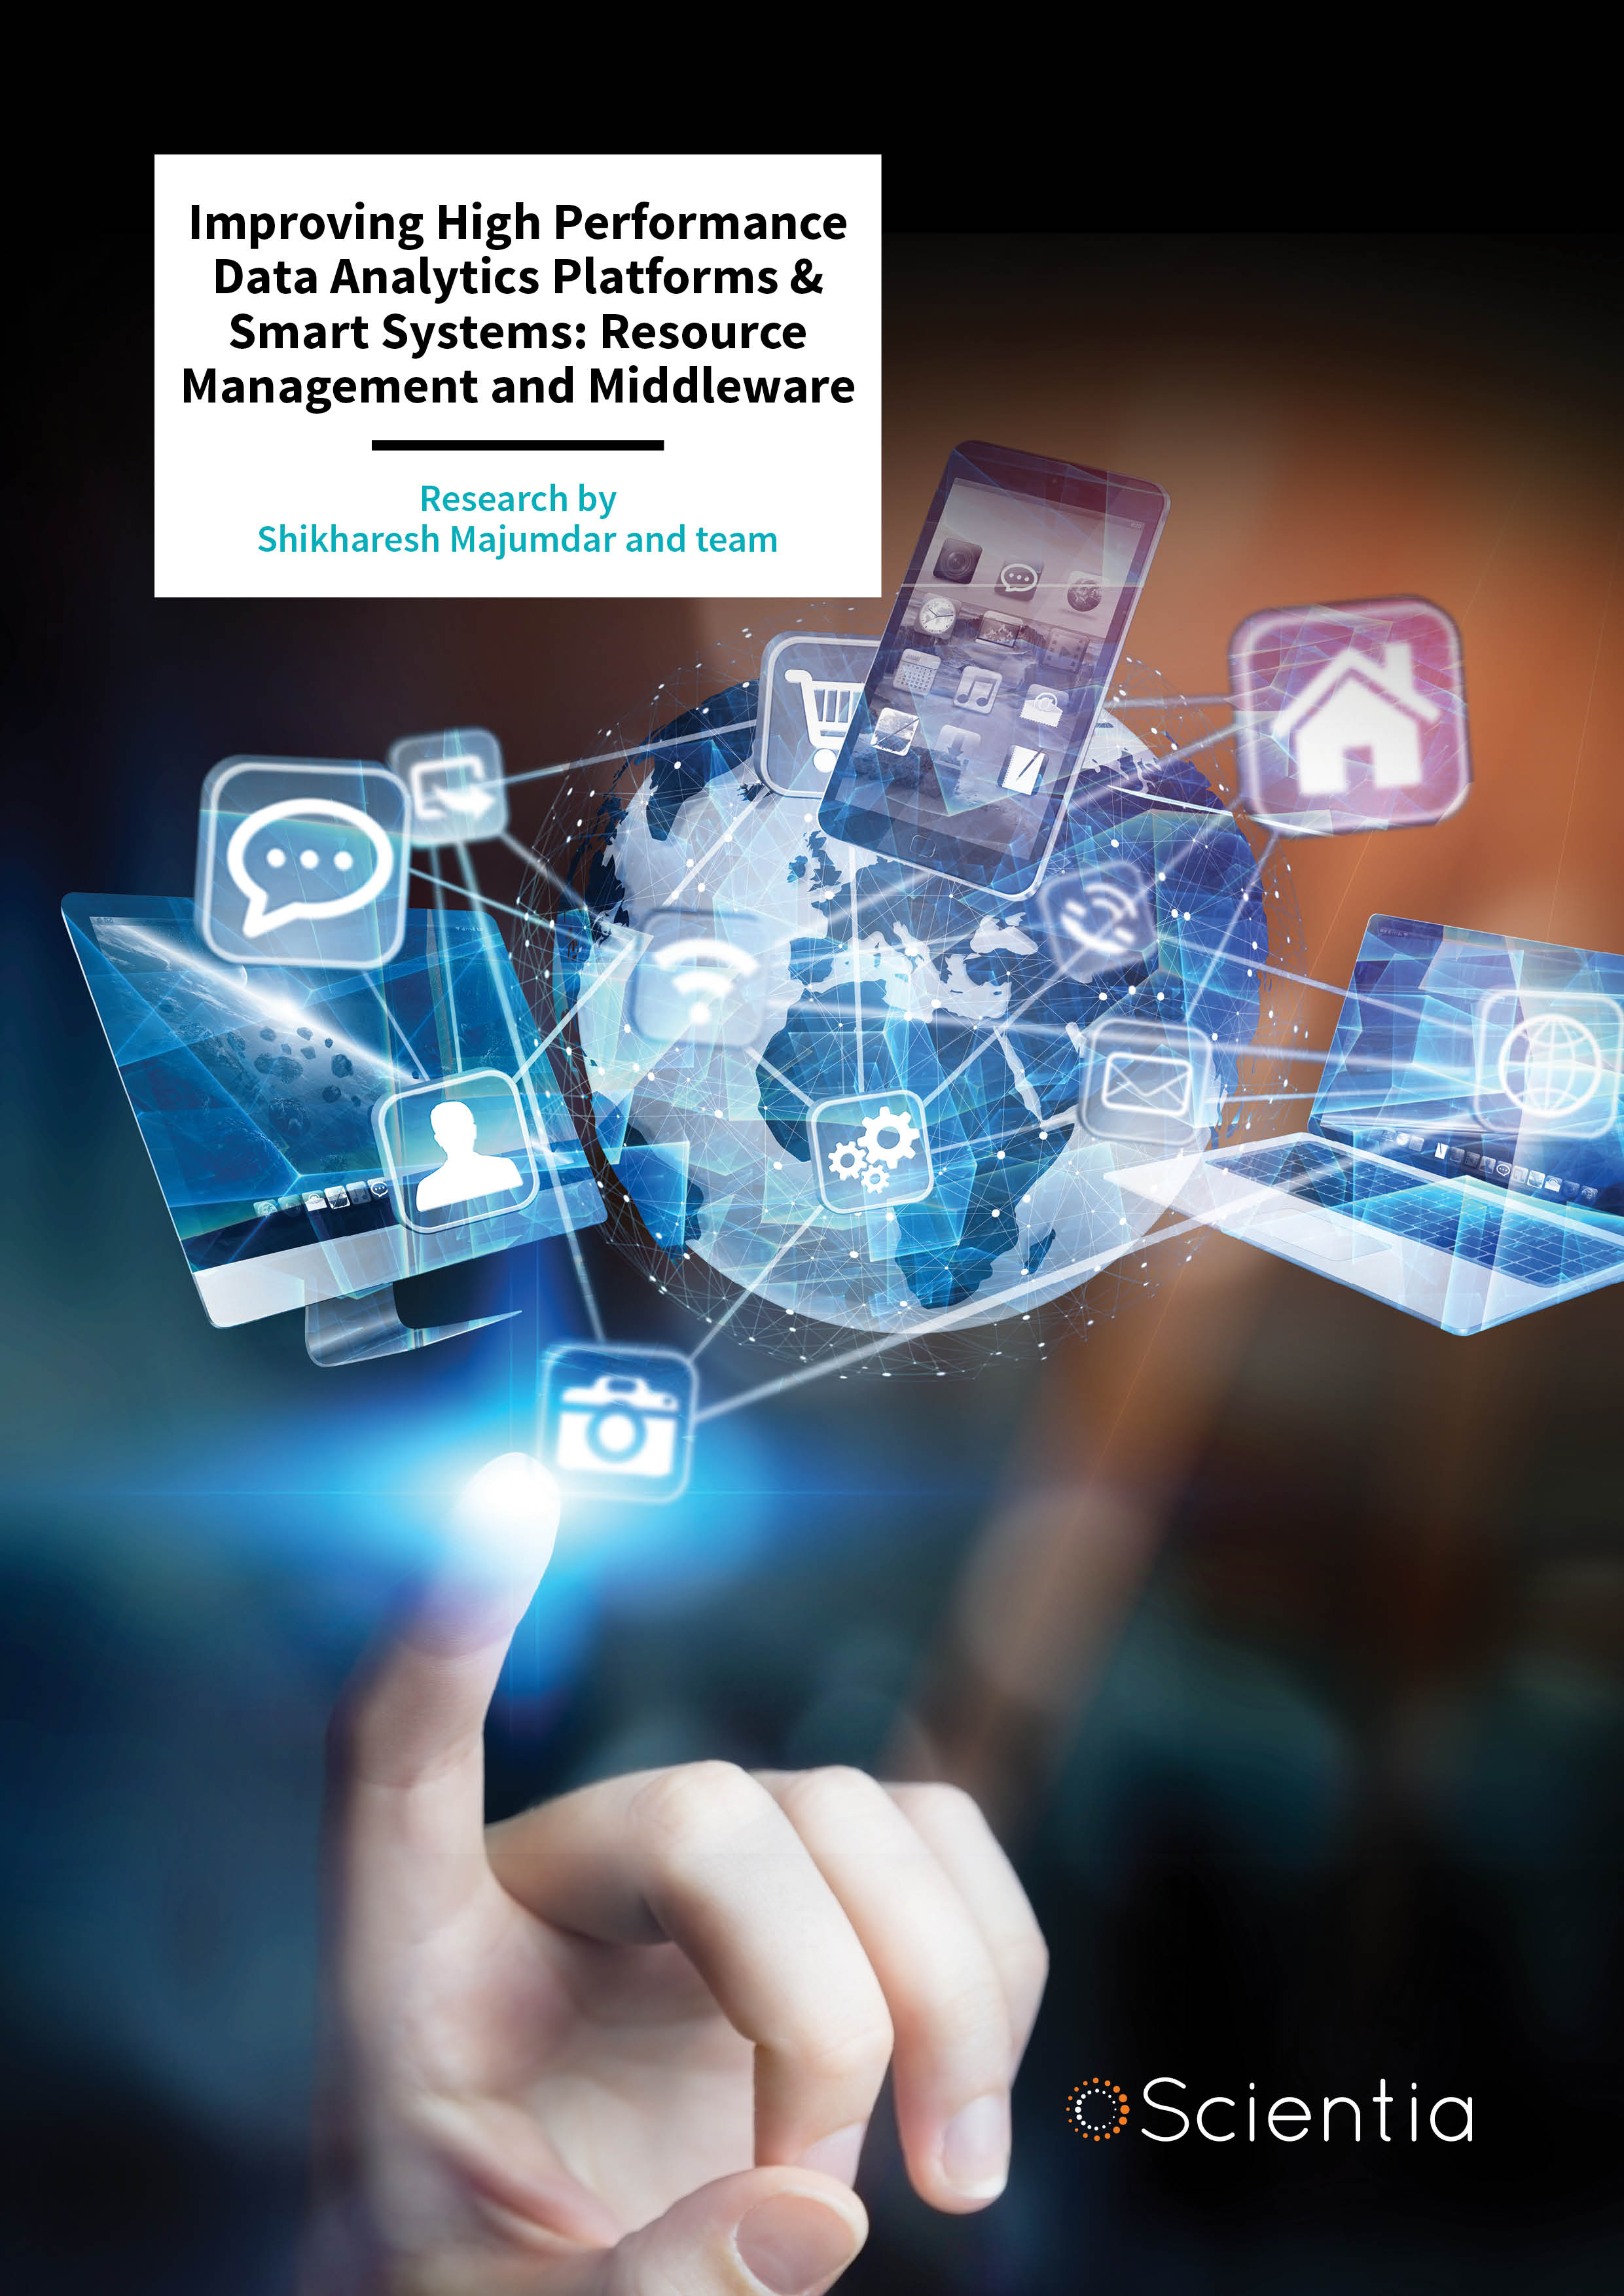 Dr Shikharesh Majumdar – Improving High Performance Data Analytics Platforms & Smart Systems: Resource Management and Middleware